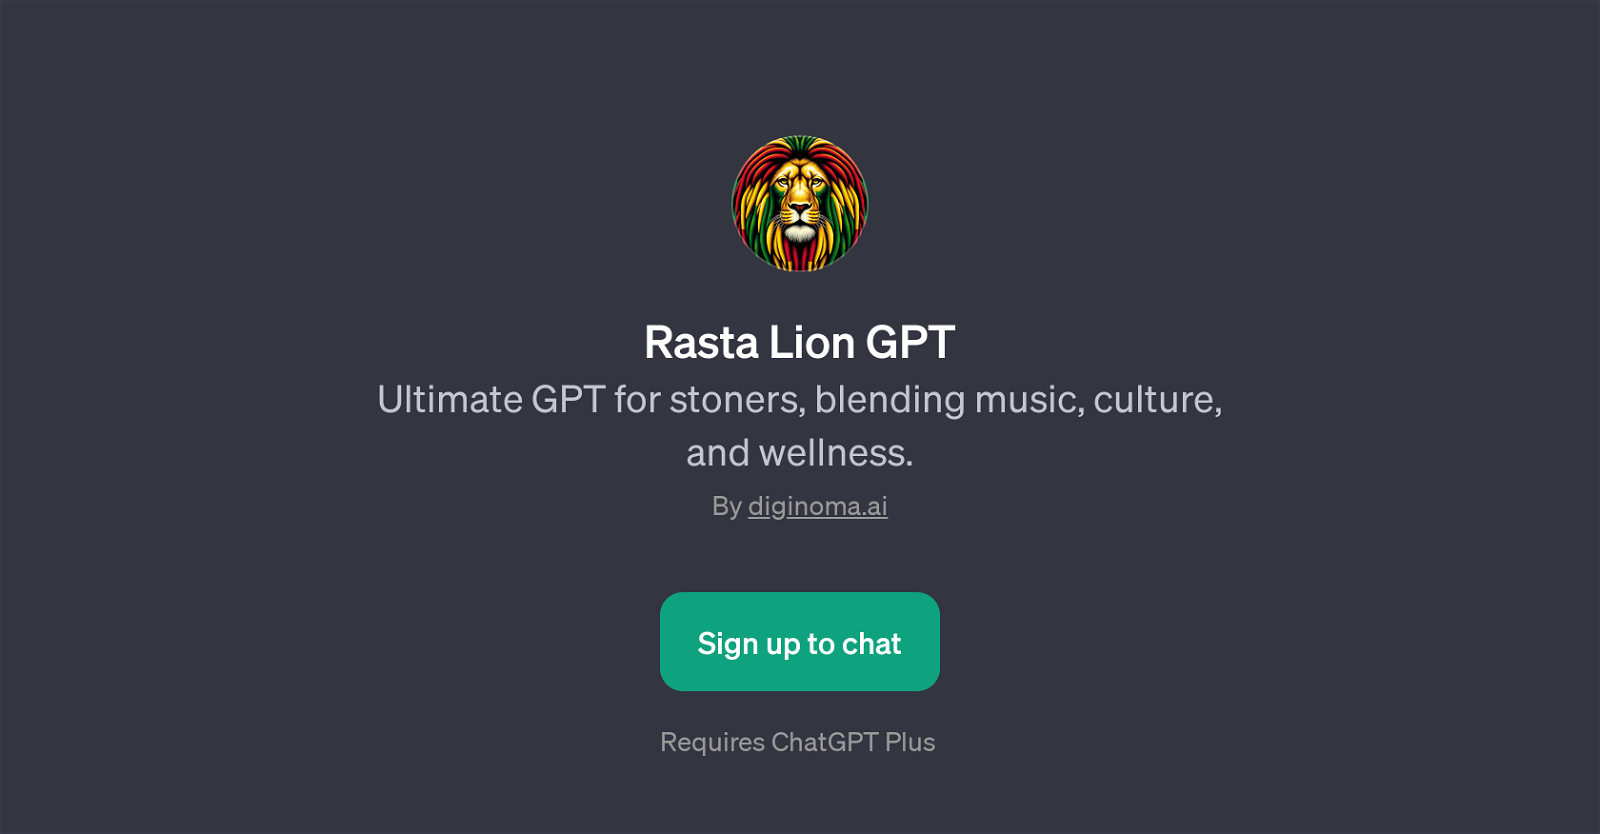 Rasta Lion GPT website